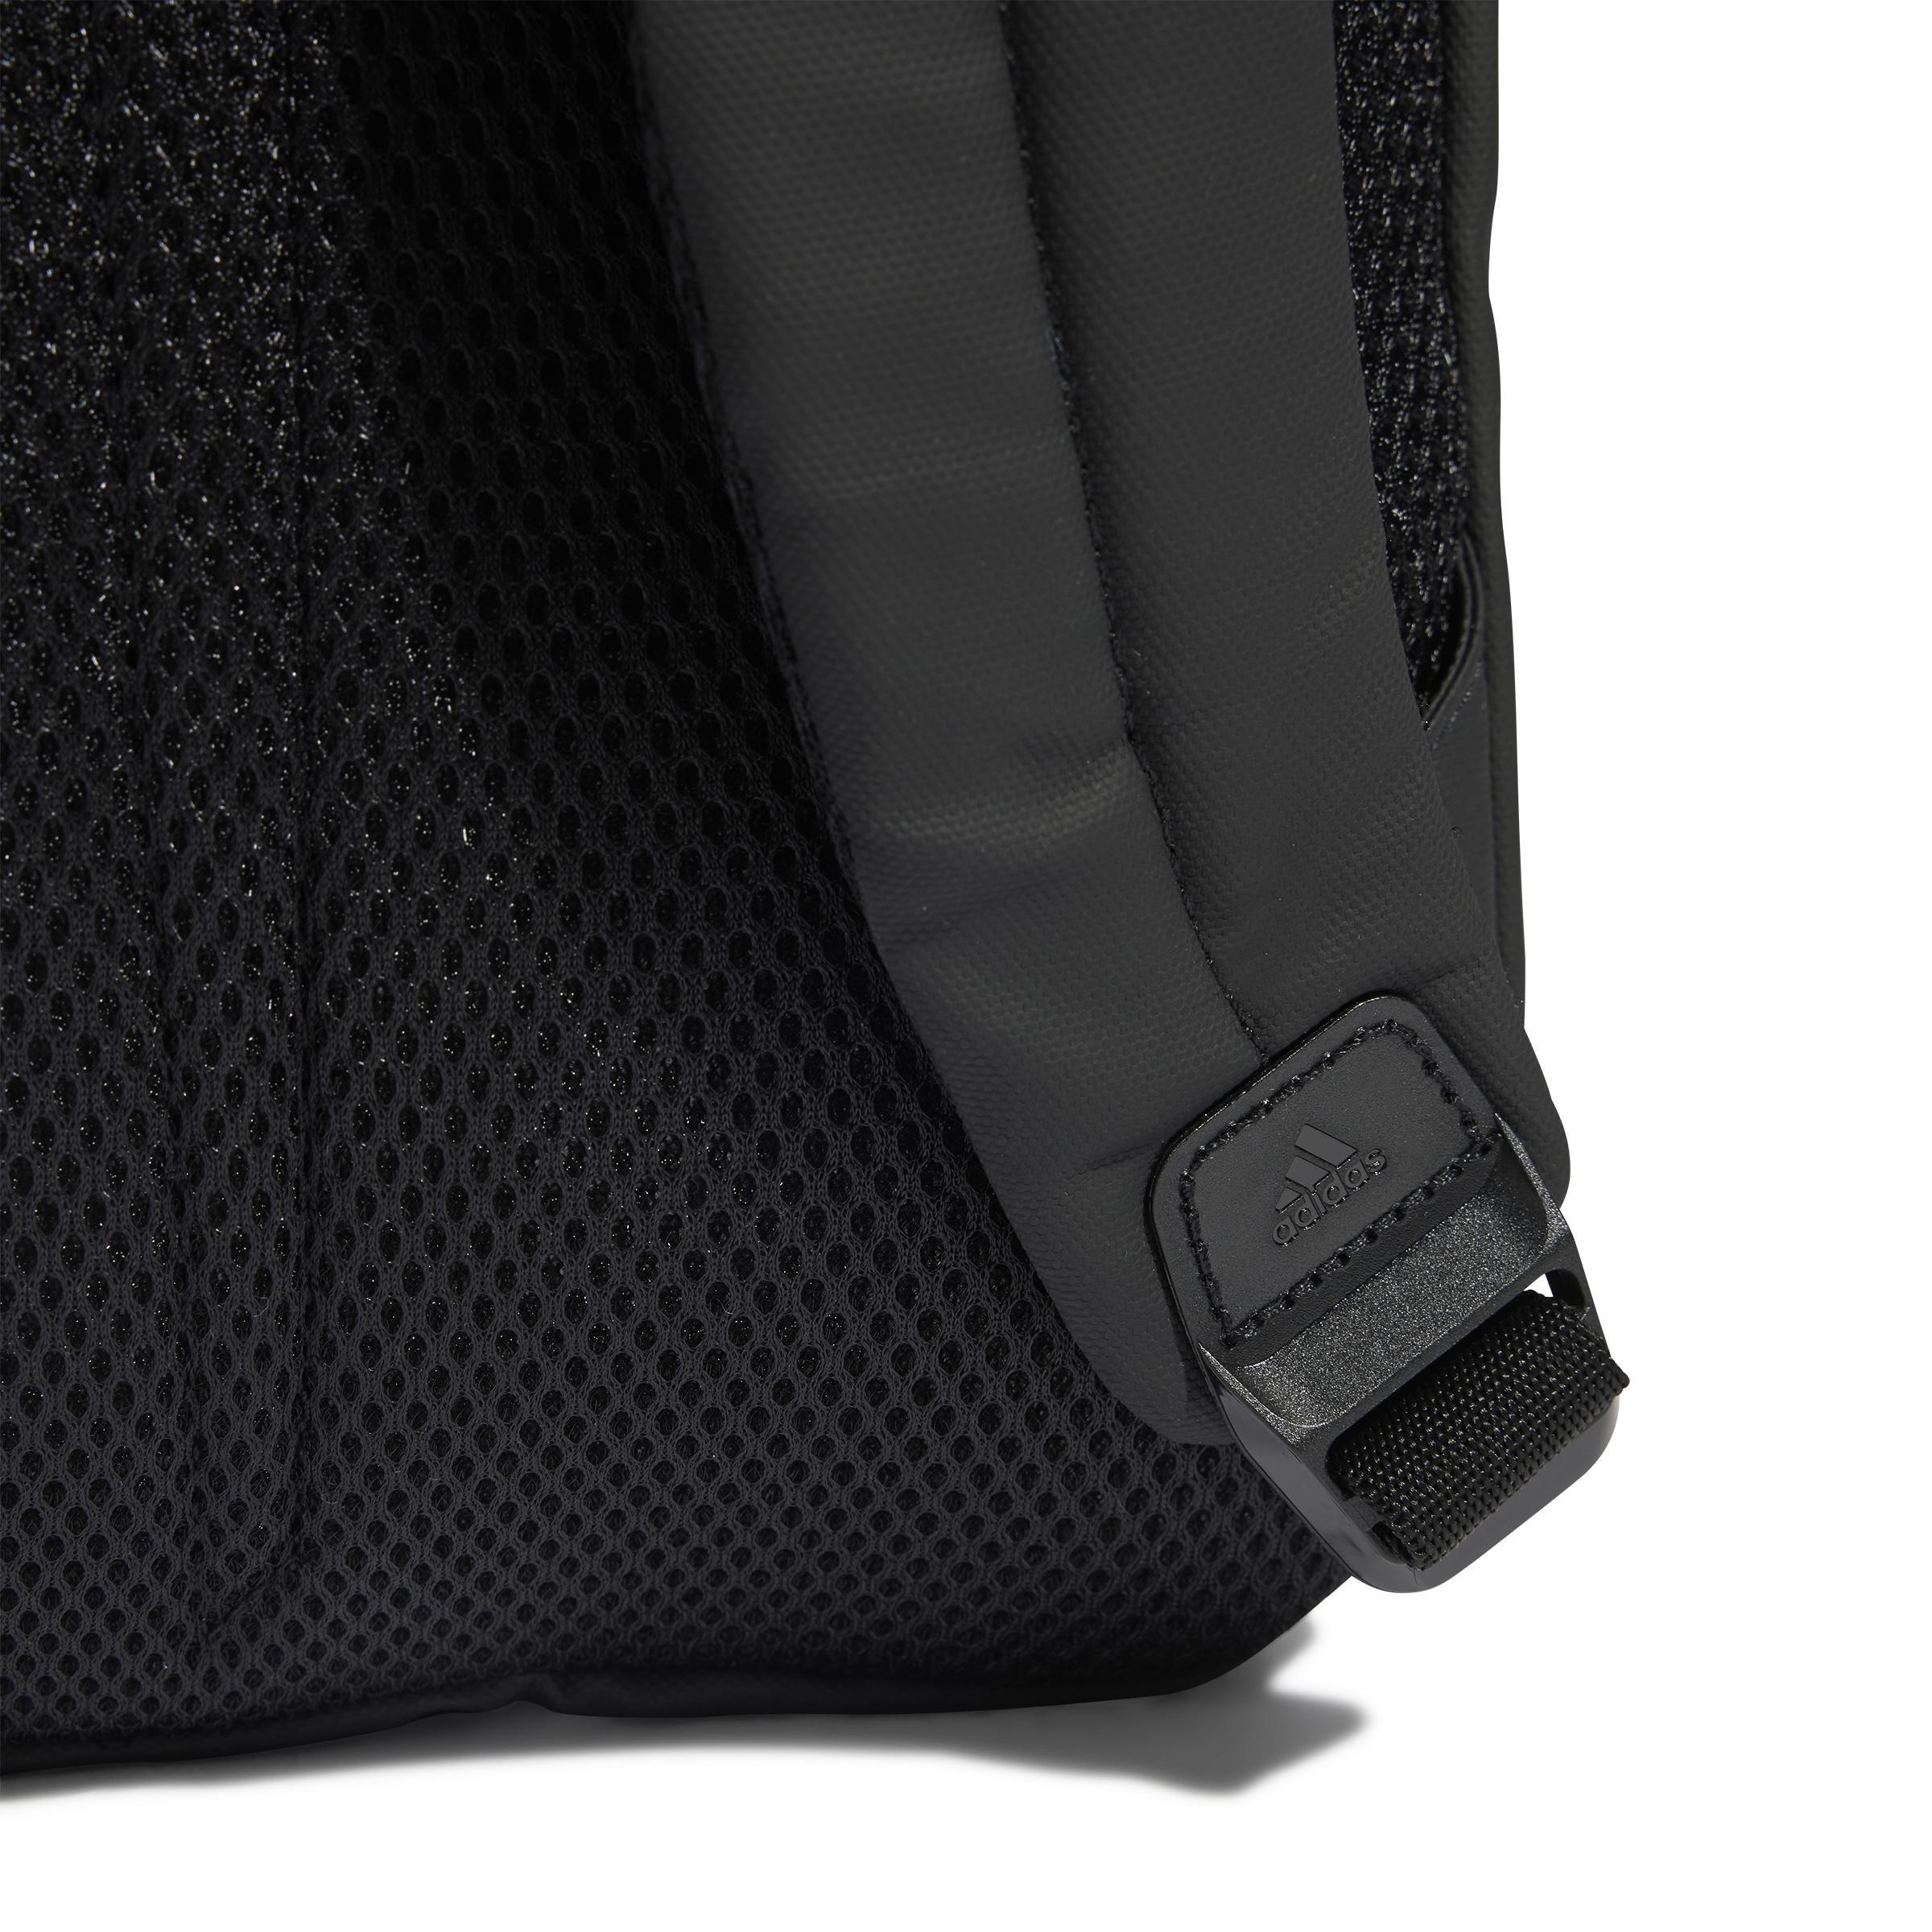 adidas - Unisex Ultramodern Backpack, Black